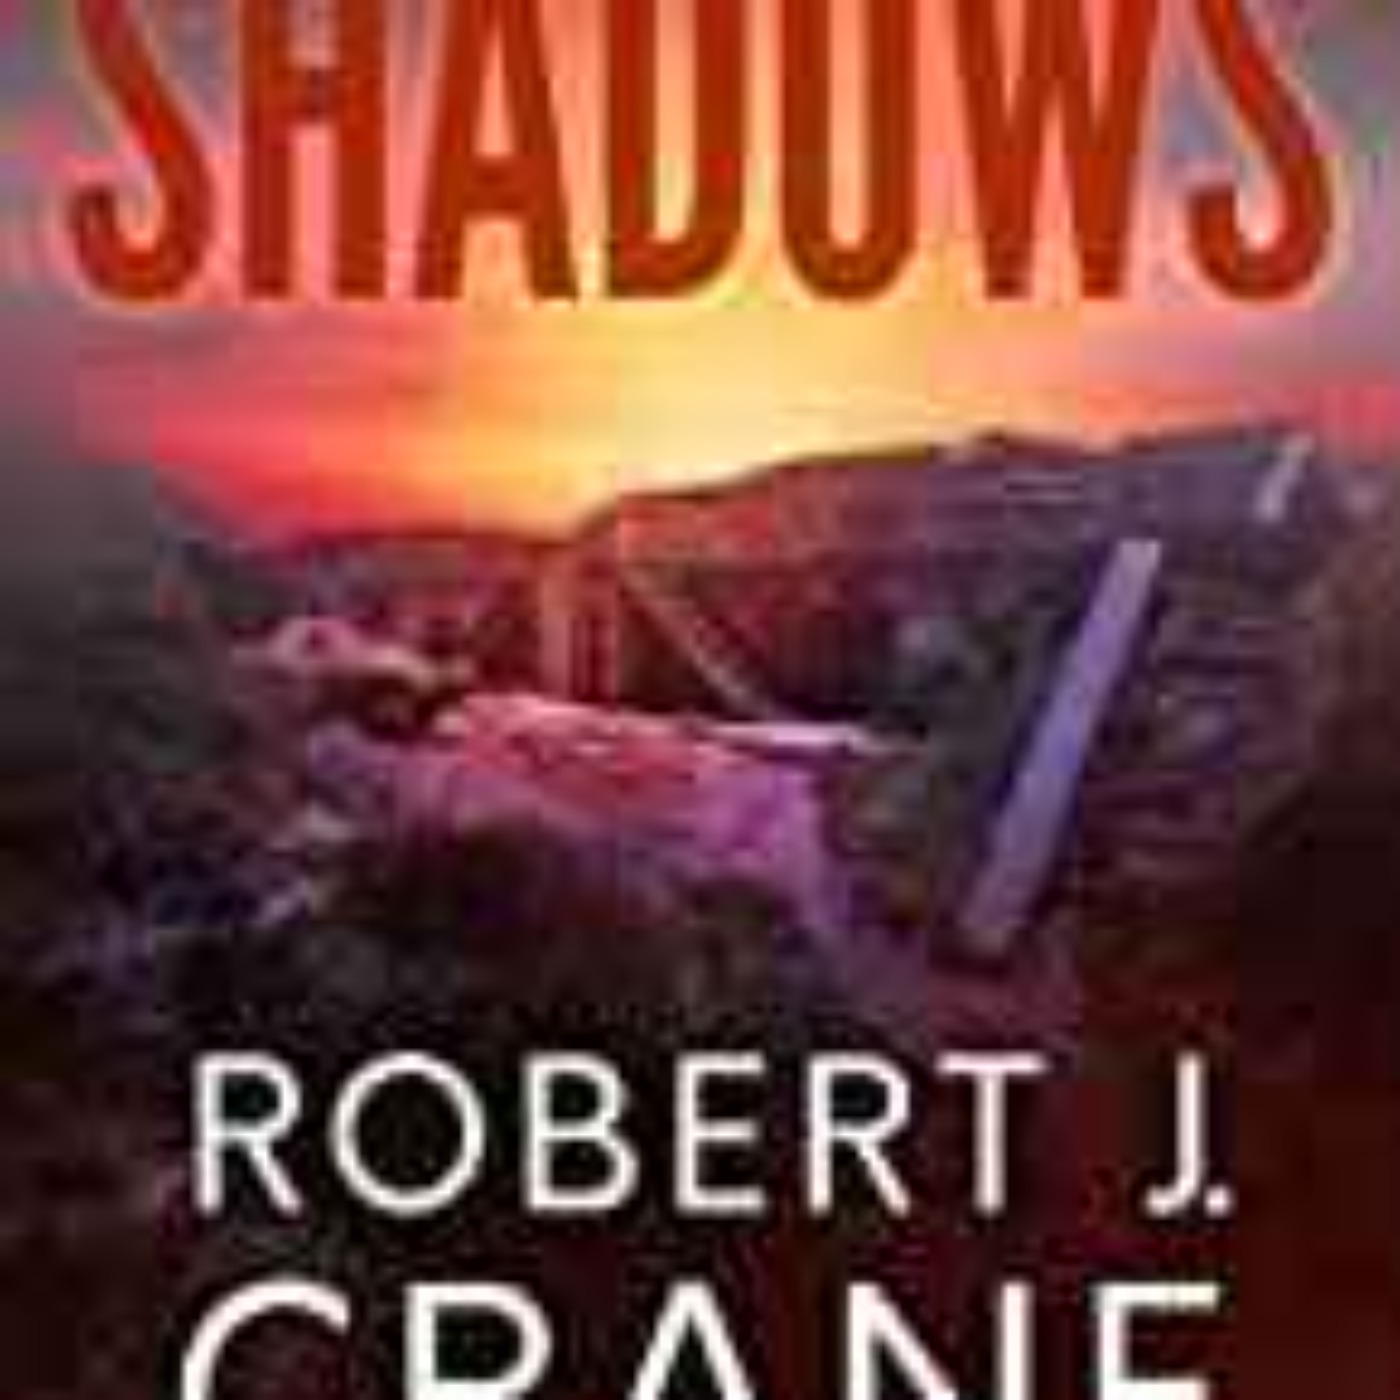 Robert J. Crane - Shadows (The Girl in the Box Book 54)